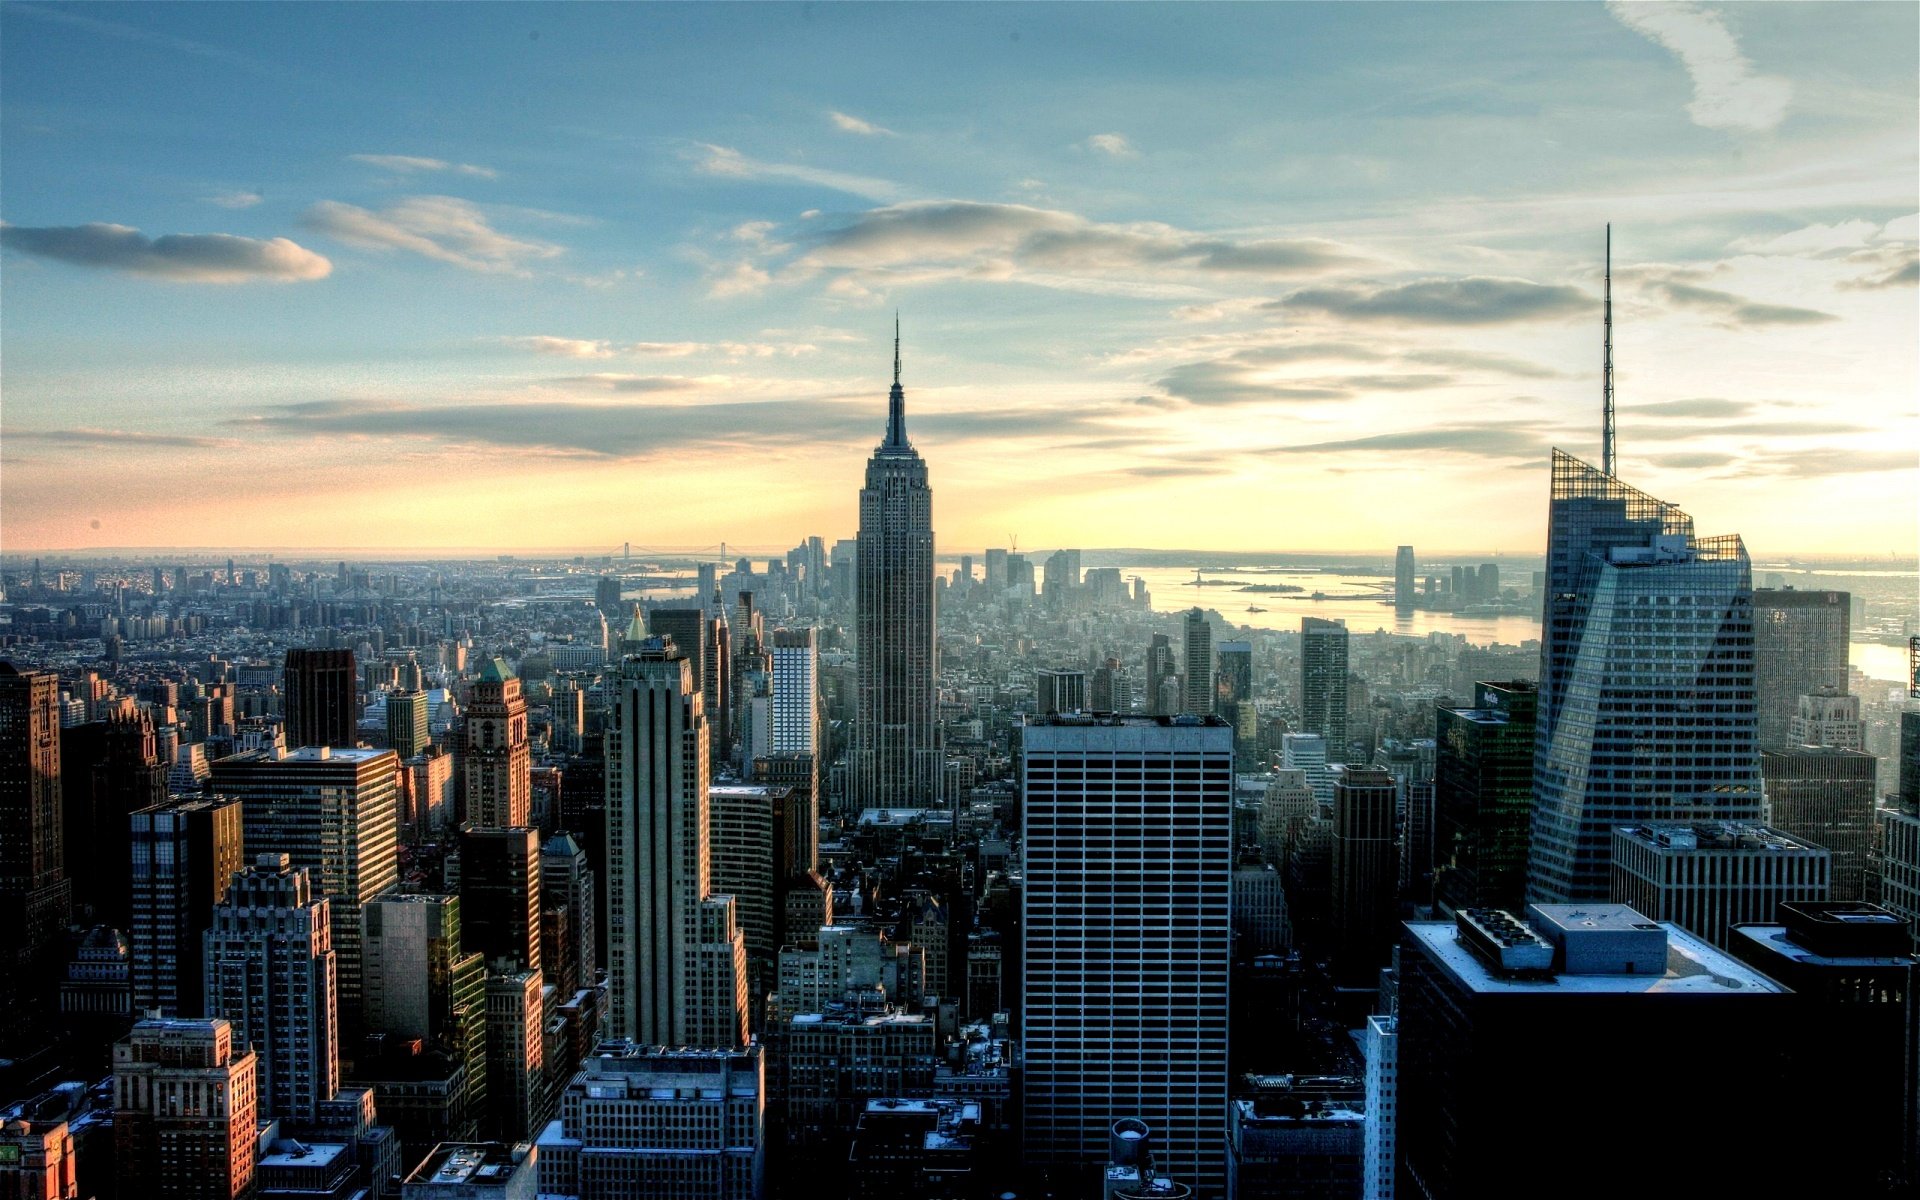 New York City Skyline Drawing - wallpaper.